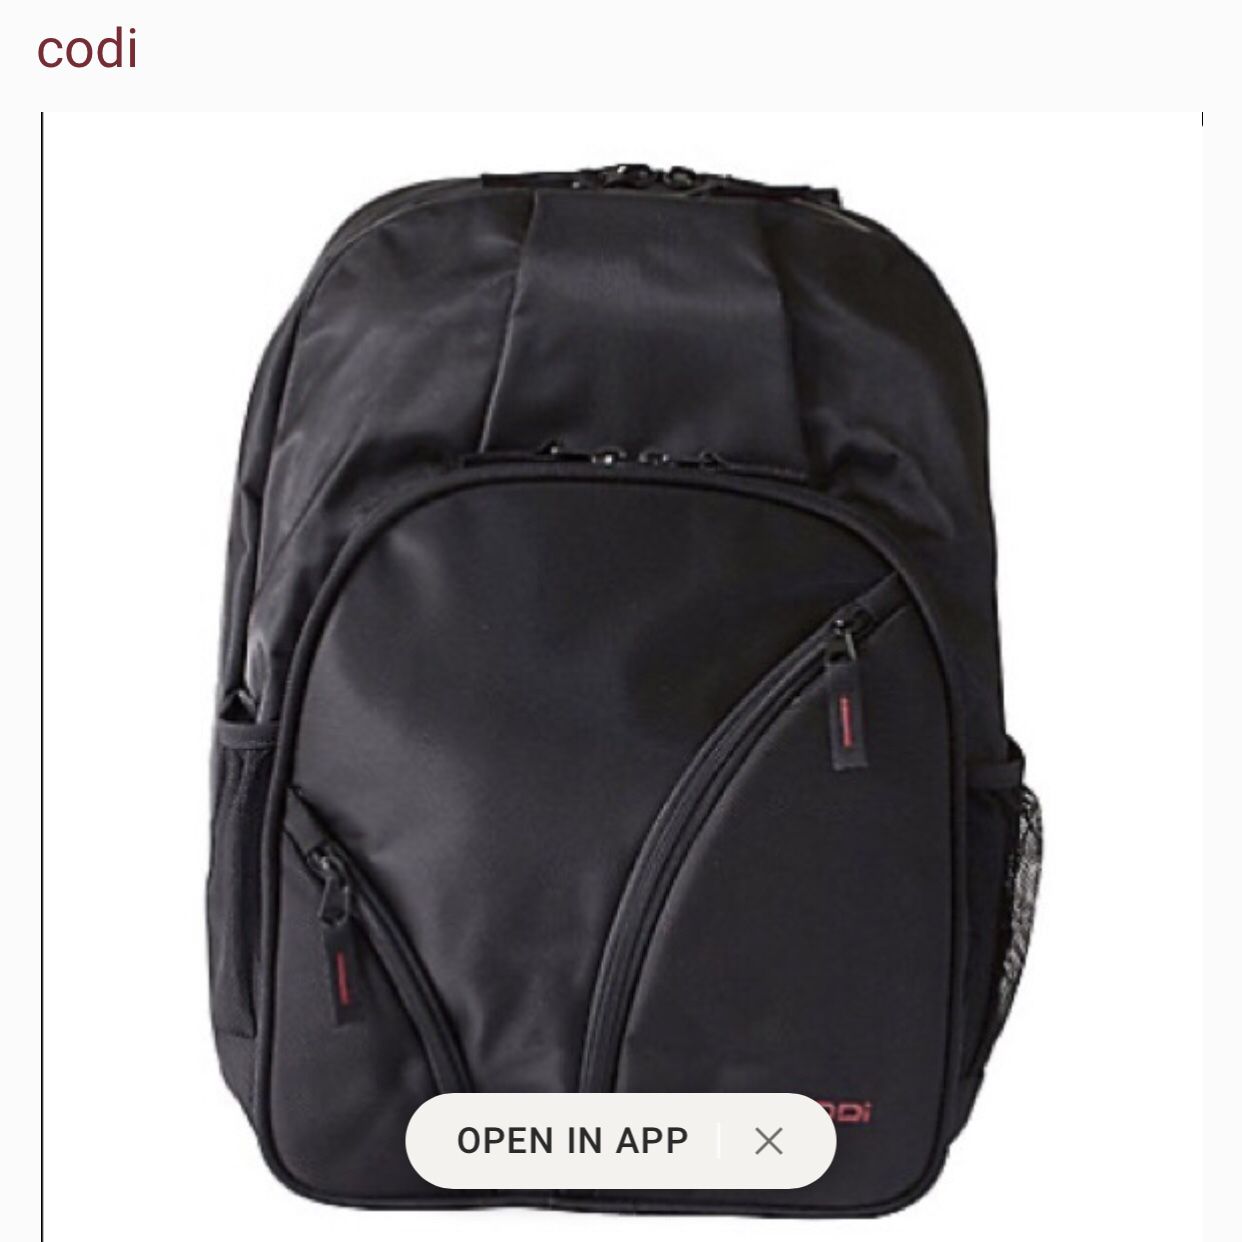 Code i laptop backpack new